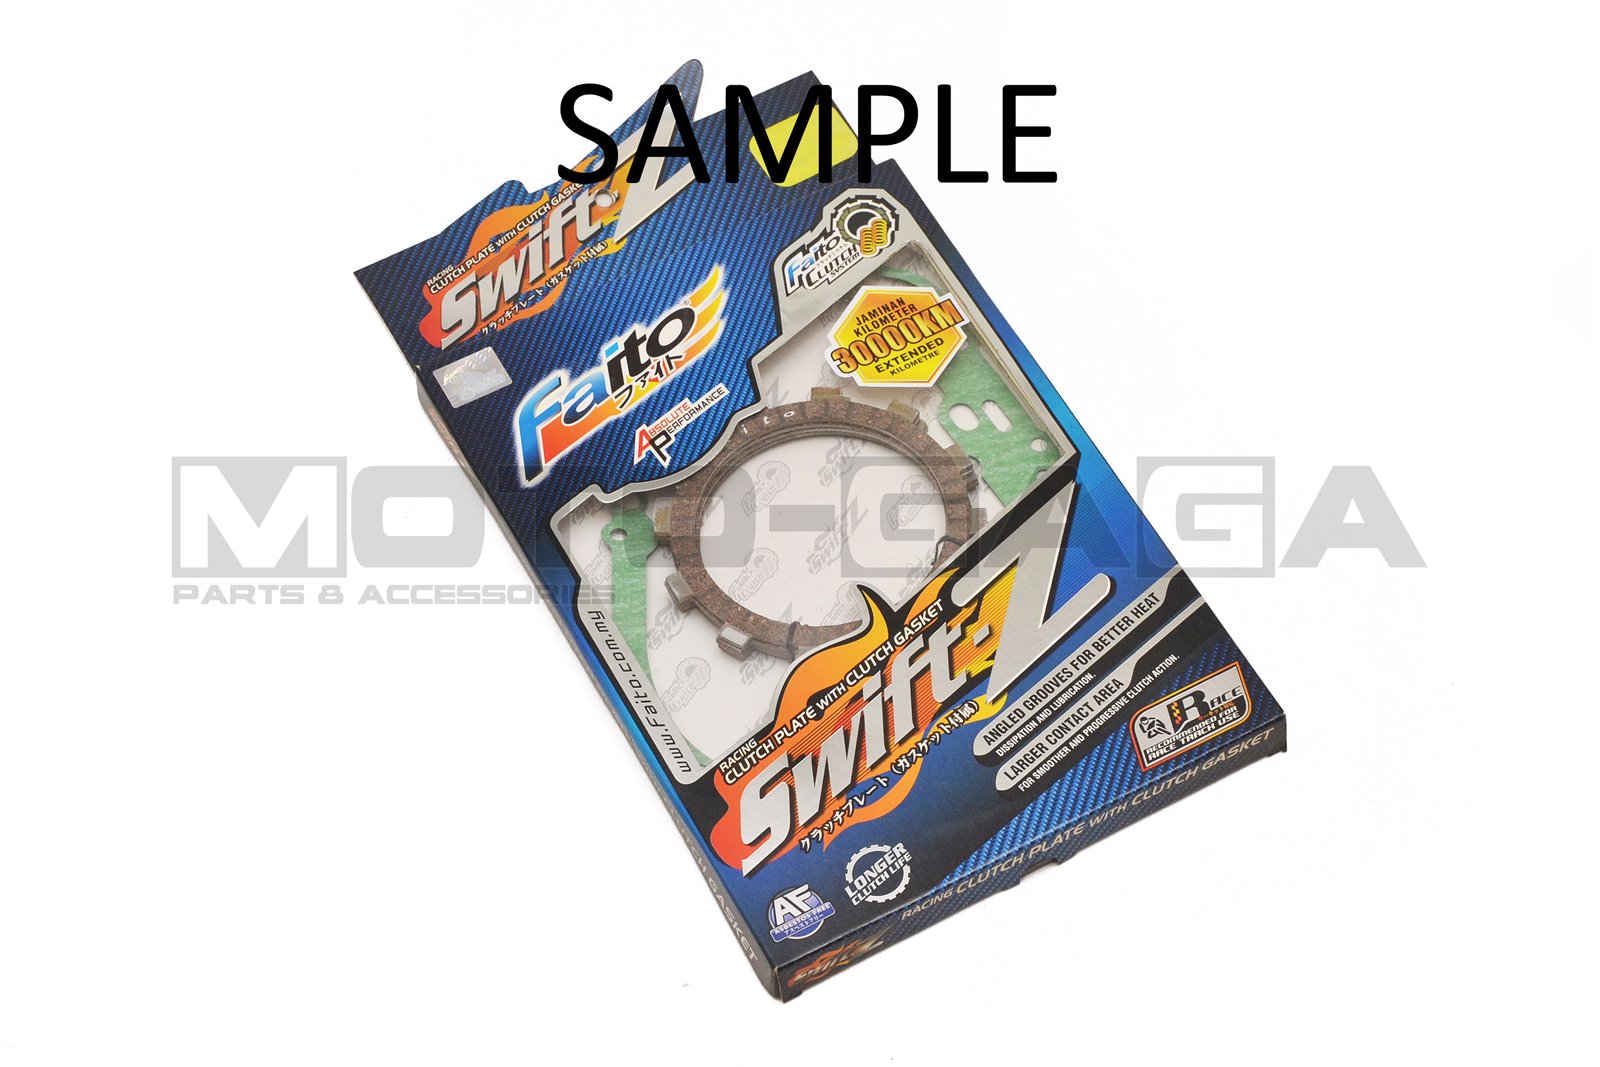 Faito Racing Clutch Plates - Yamaha T150